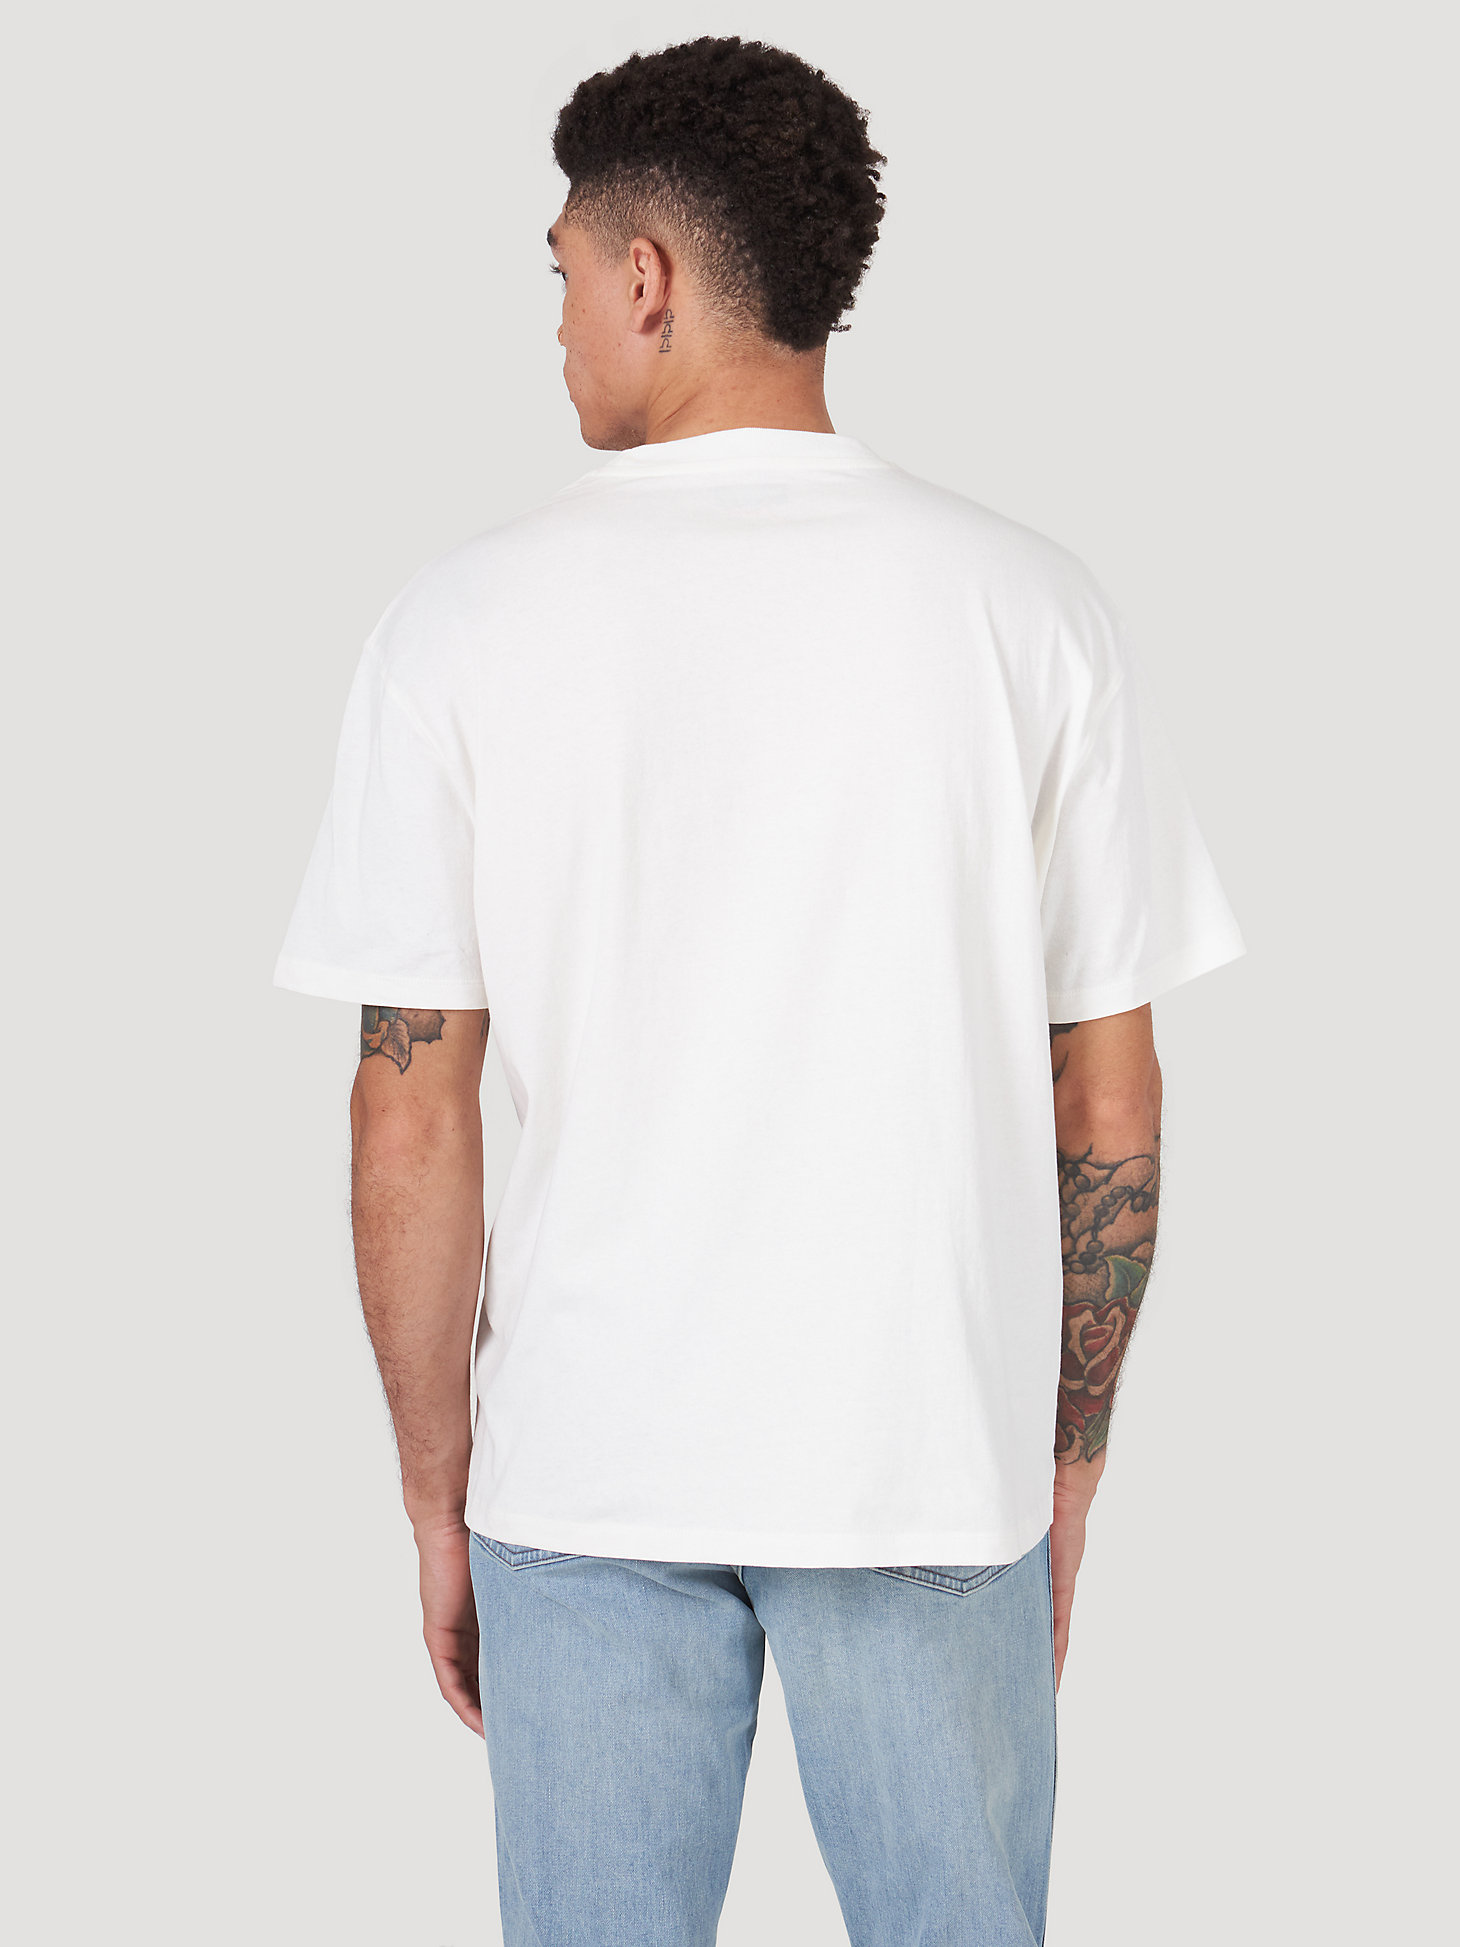 Wrangler x Fender On Tour T-Shirt in Worn White alternative view 1